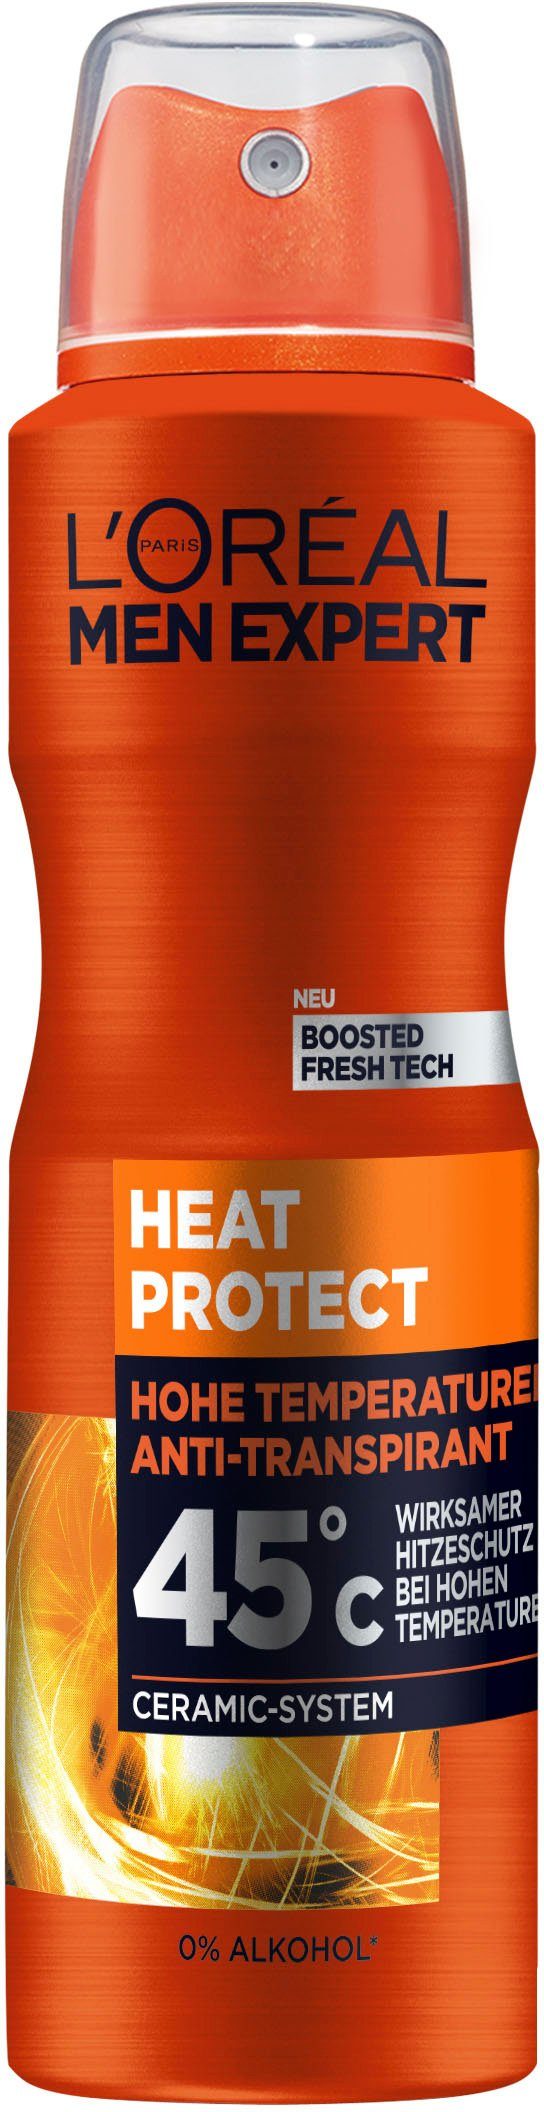 Protect 6-tlg. 45°C, Deo Packung, PARIS Heat Spray MEN L'ORÉAL Deo-Spray EXPERT